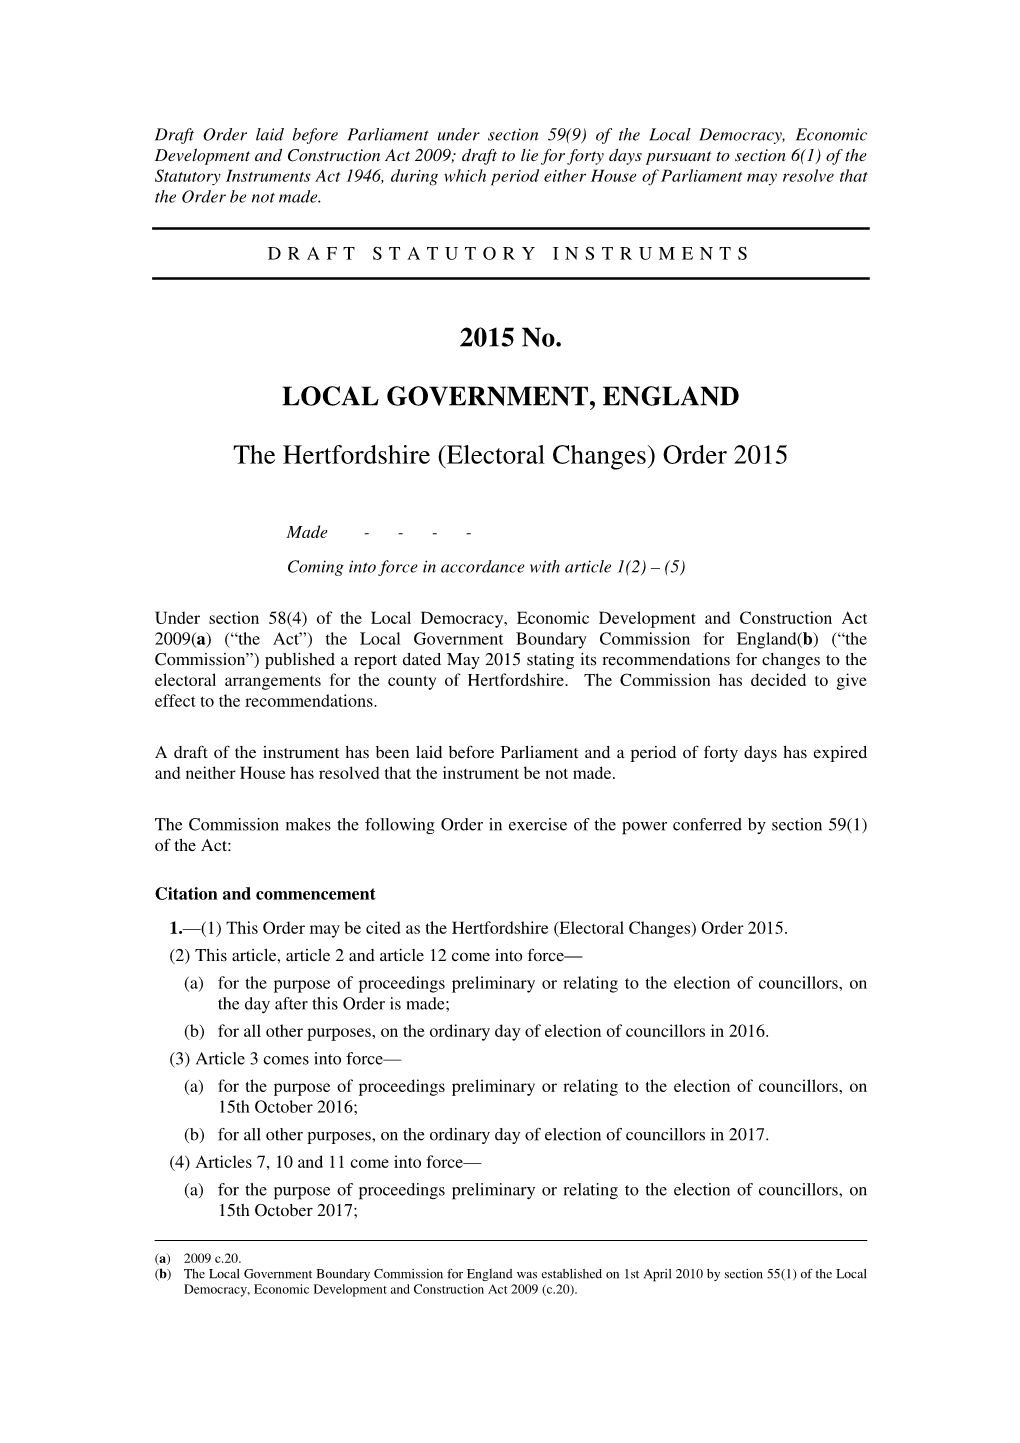 The Hertfordshire (Electoral Changes) Order 2015